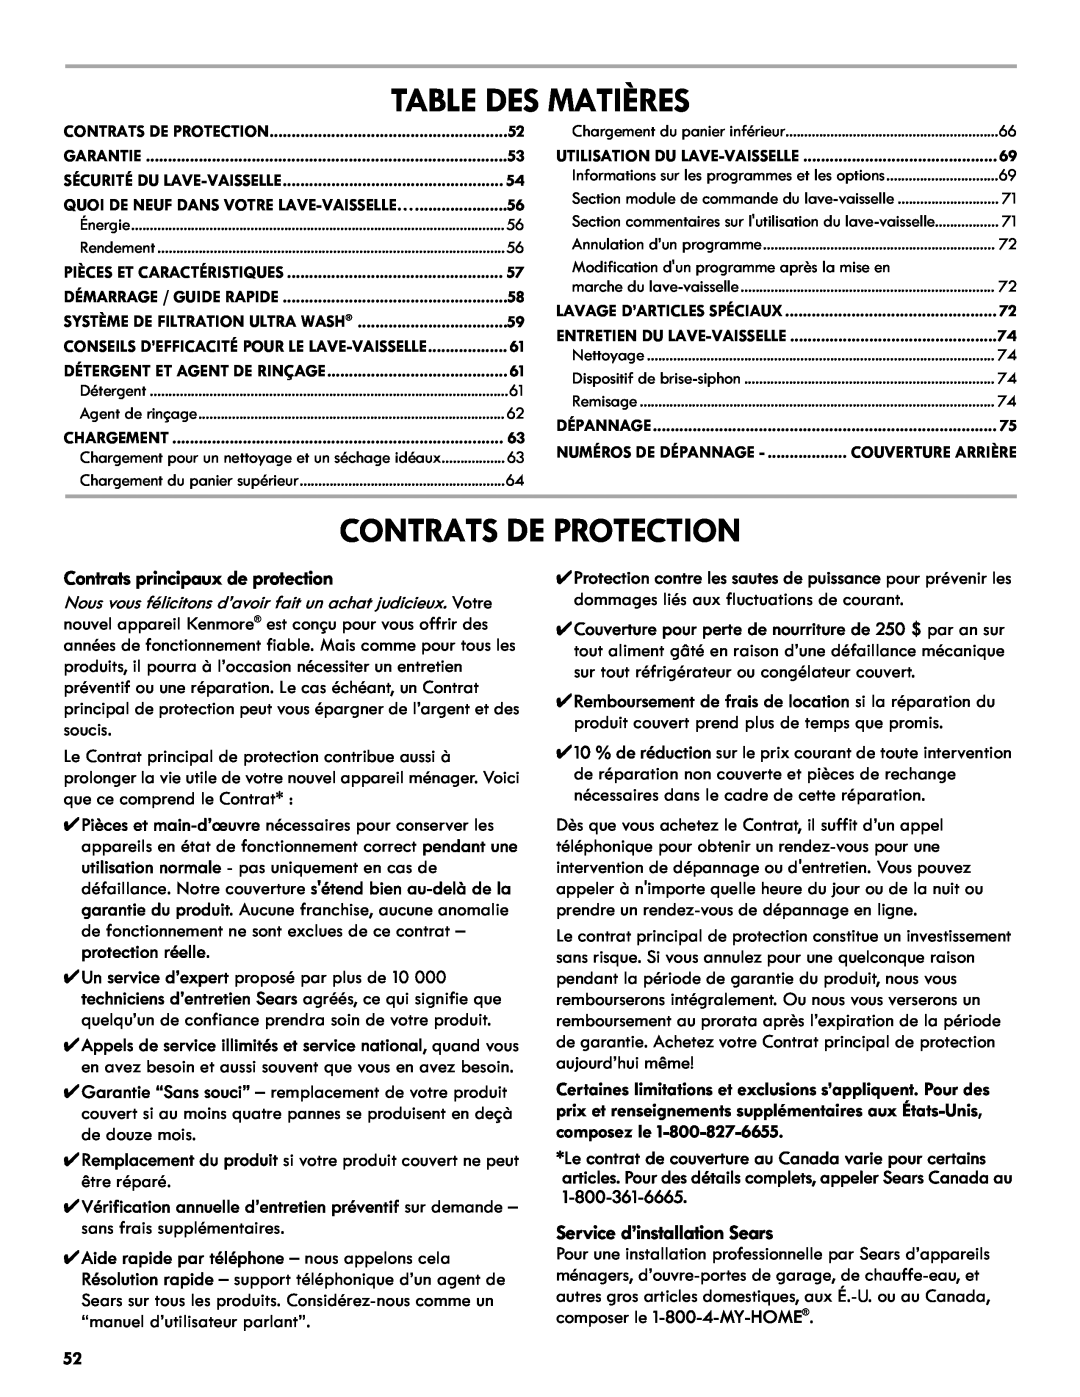 Kenmore 665.1327 manual Table Des Matières, Contrats De Protection, Contrats principaux de protection 